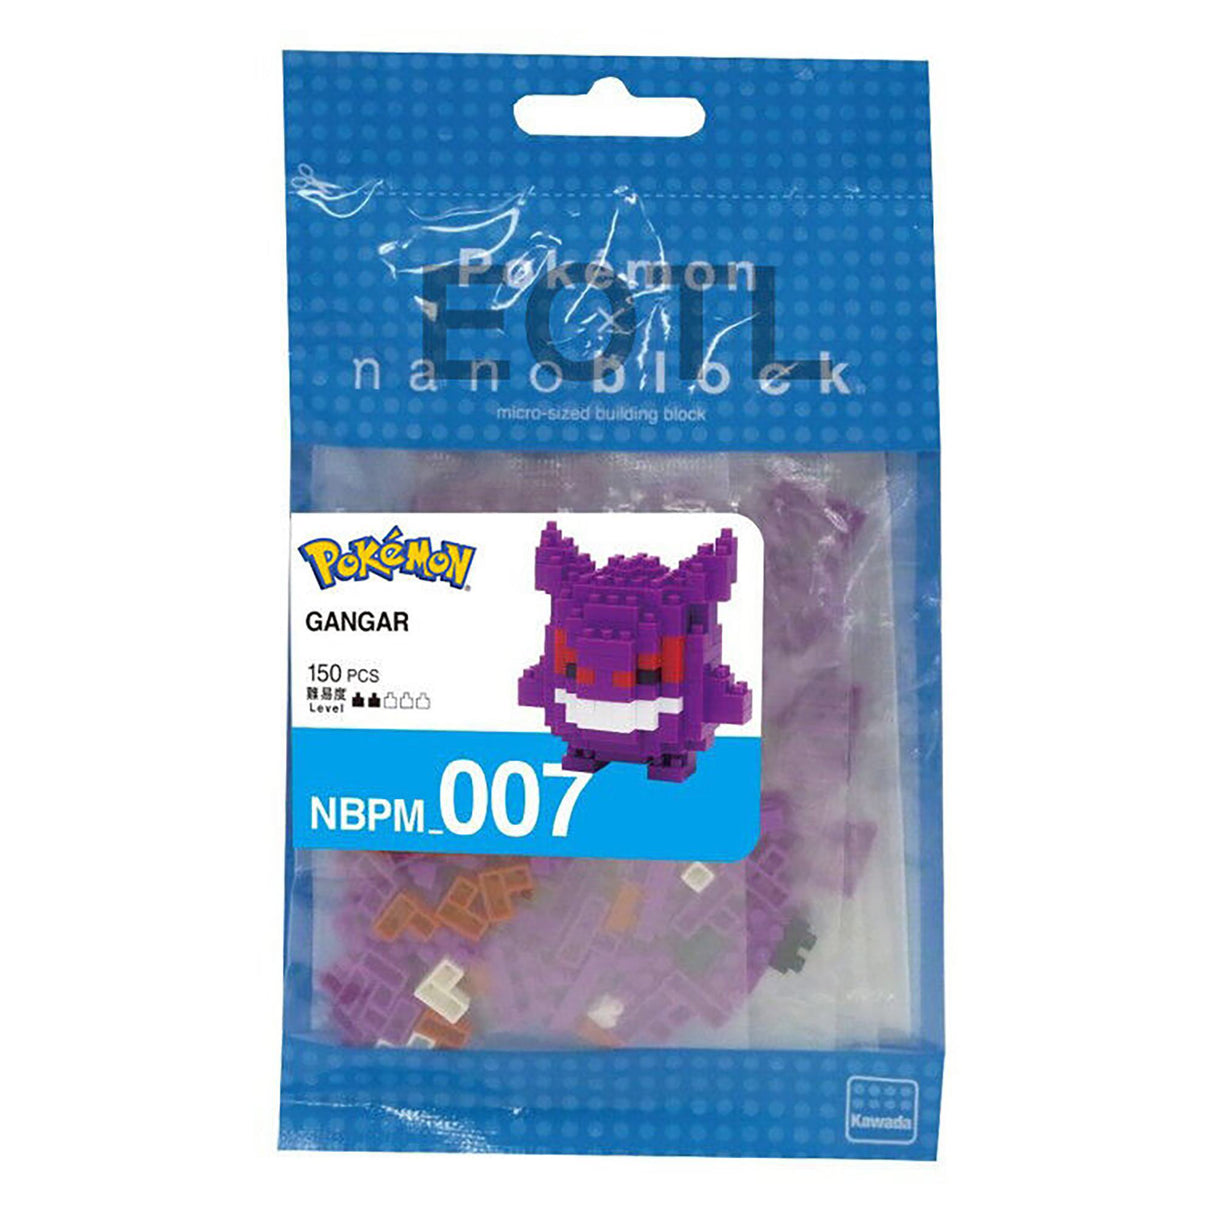 nanoblock Pokemon - Gengar (150 pieces)